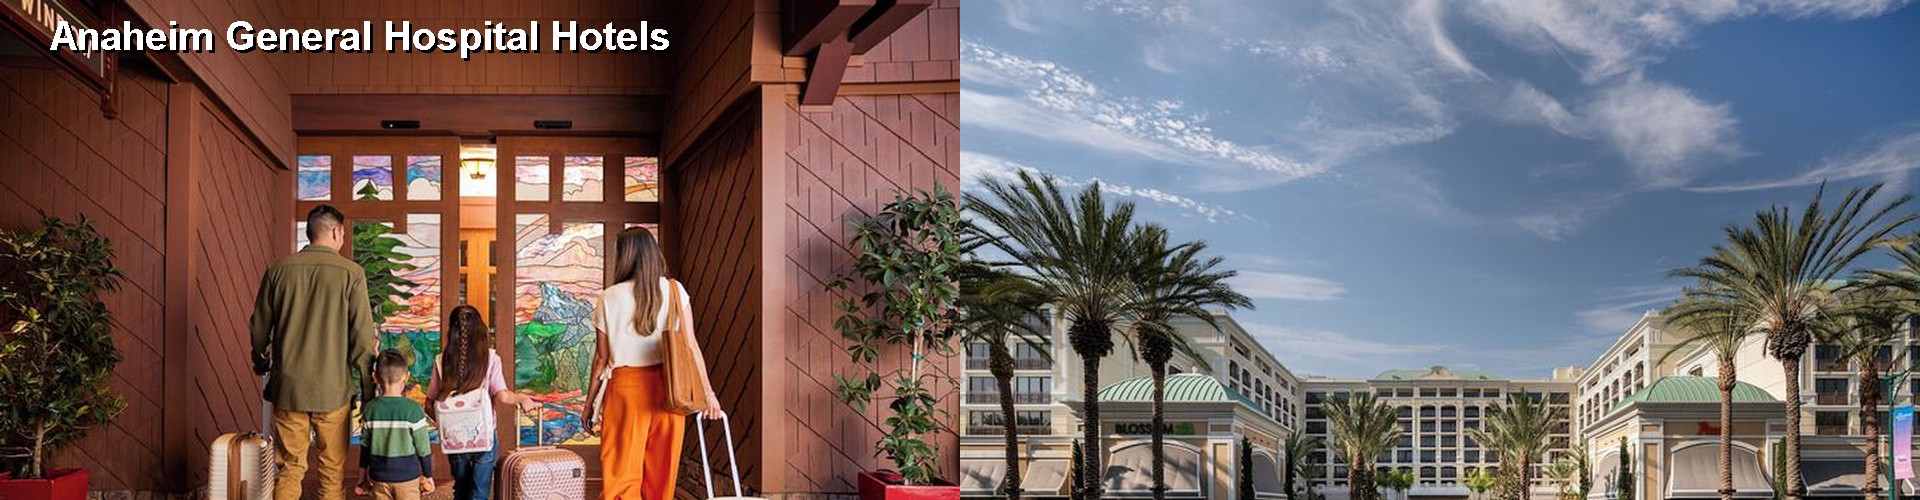 3 Best Hotels near Anaheim General Hospital